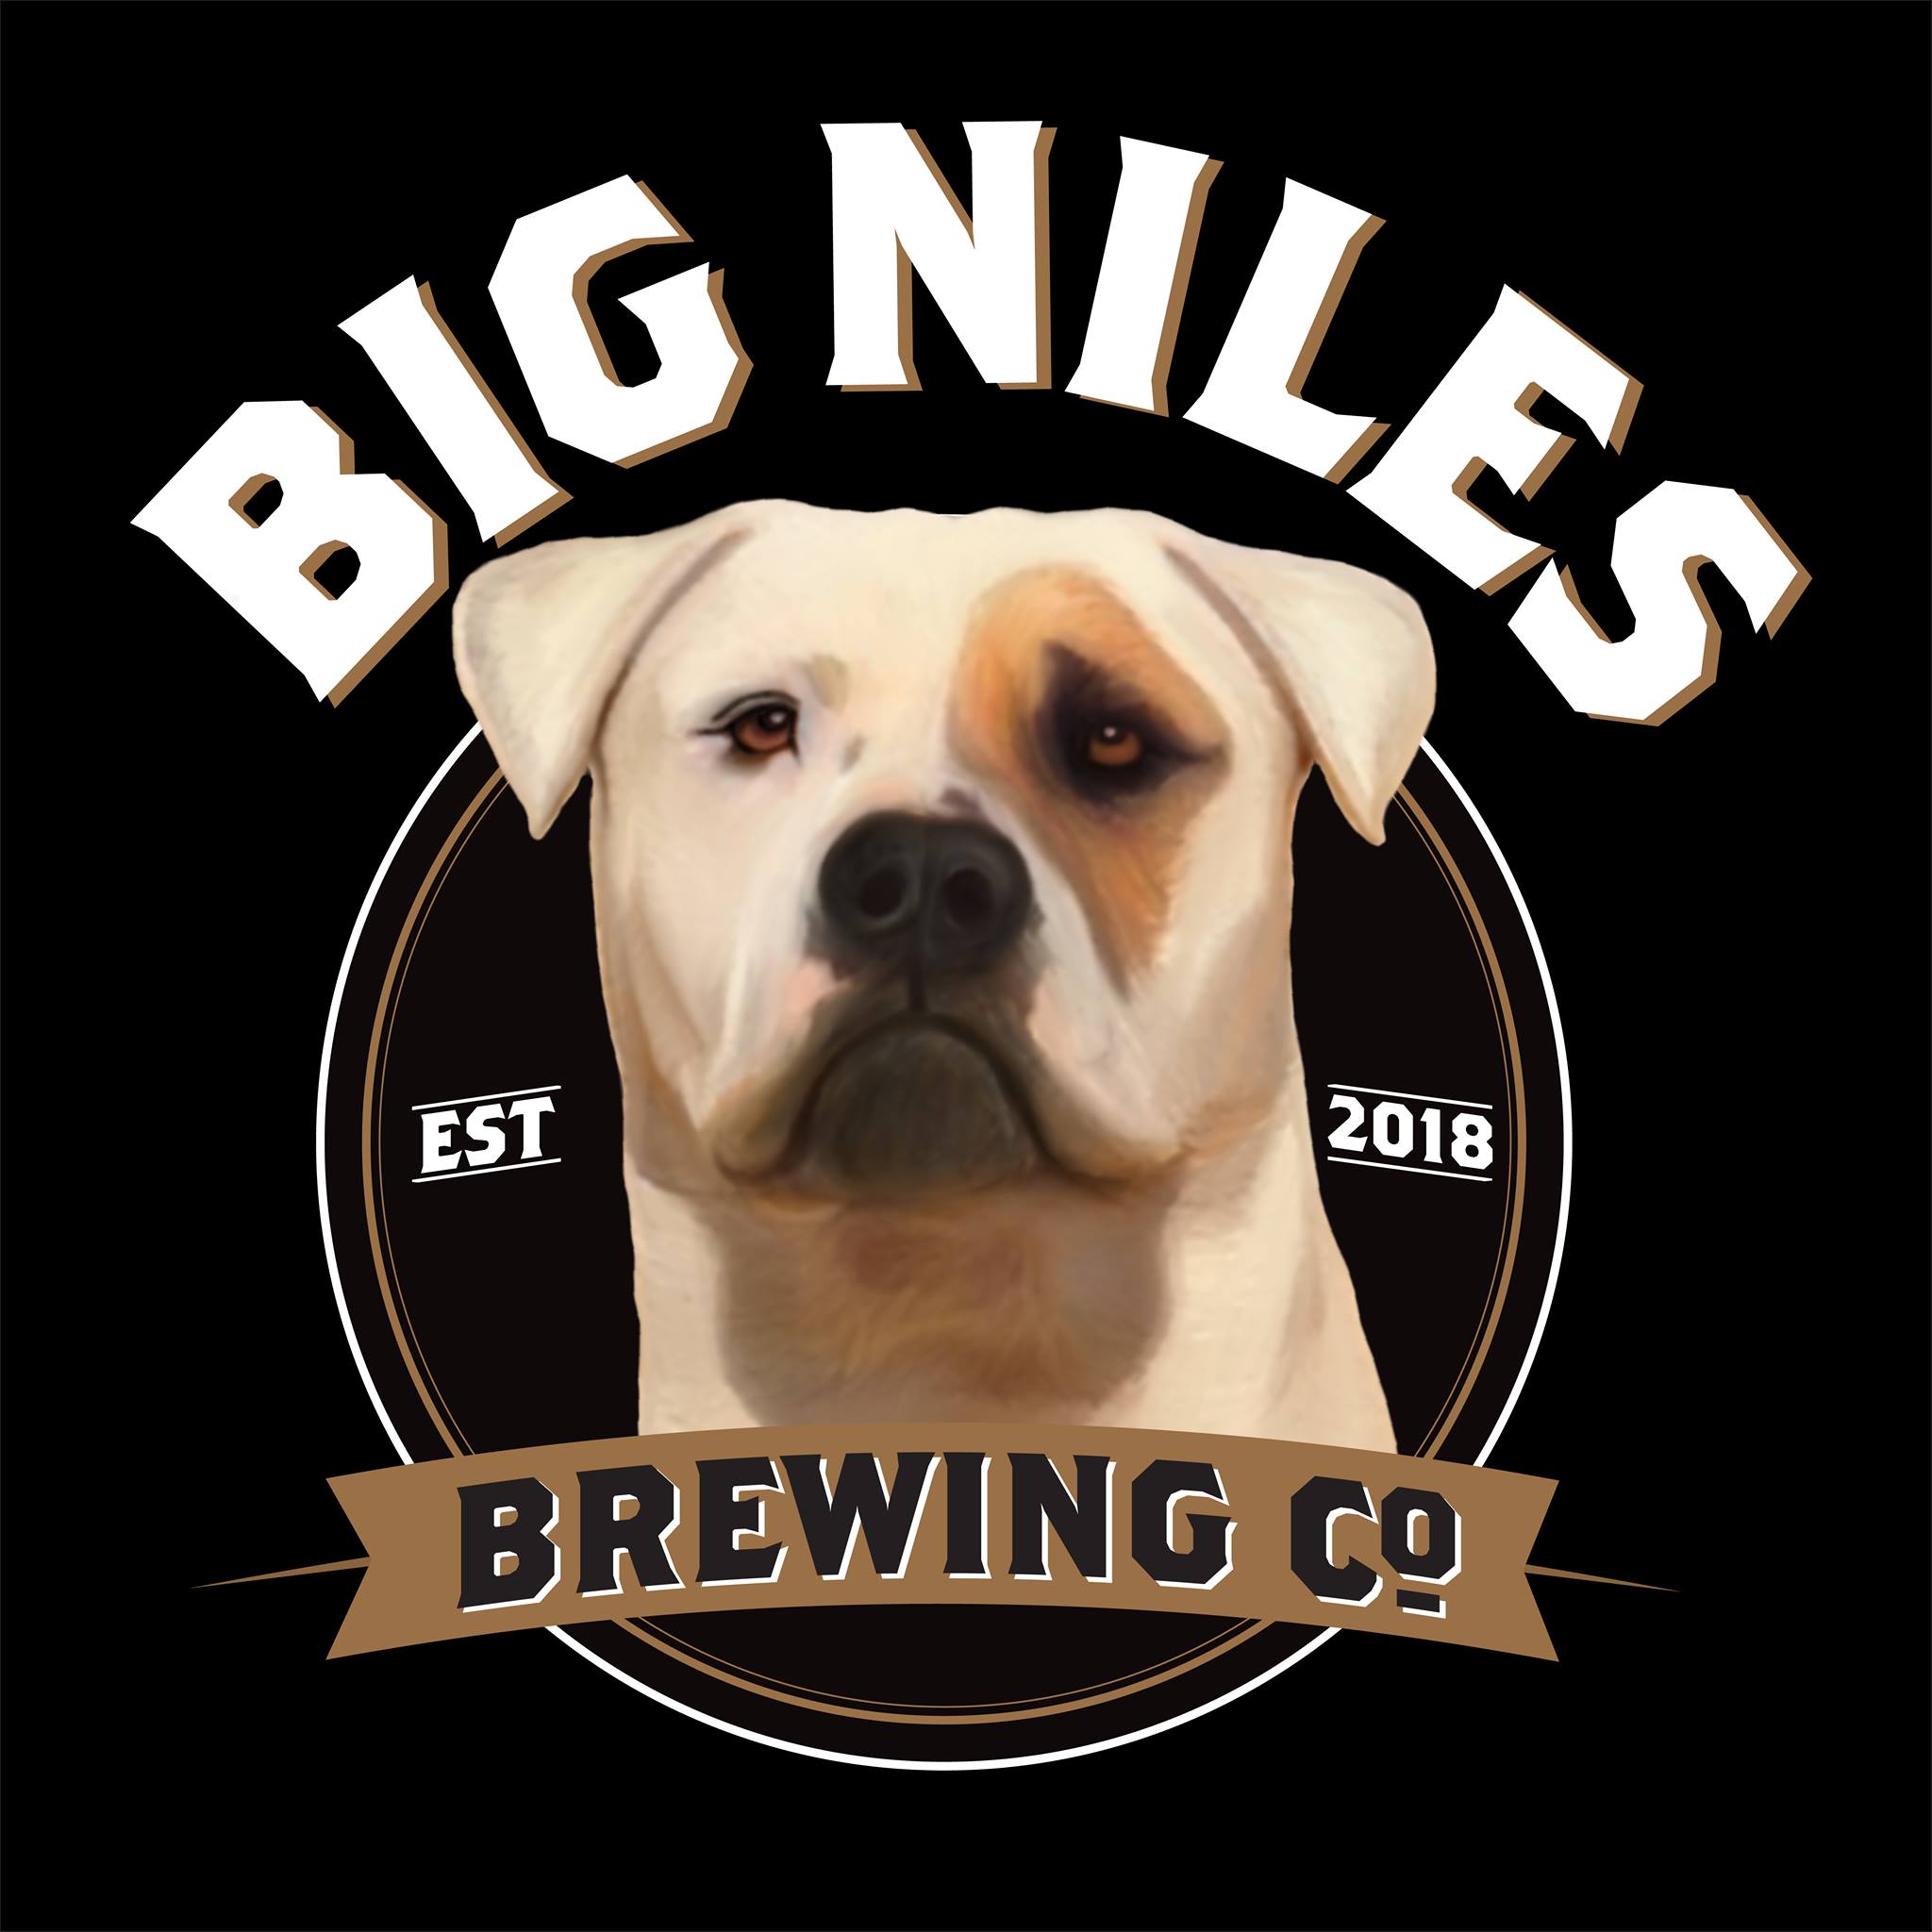 Big Niles Brewing Co